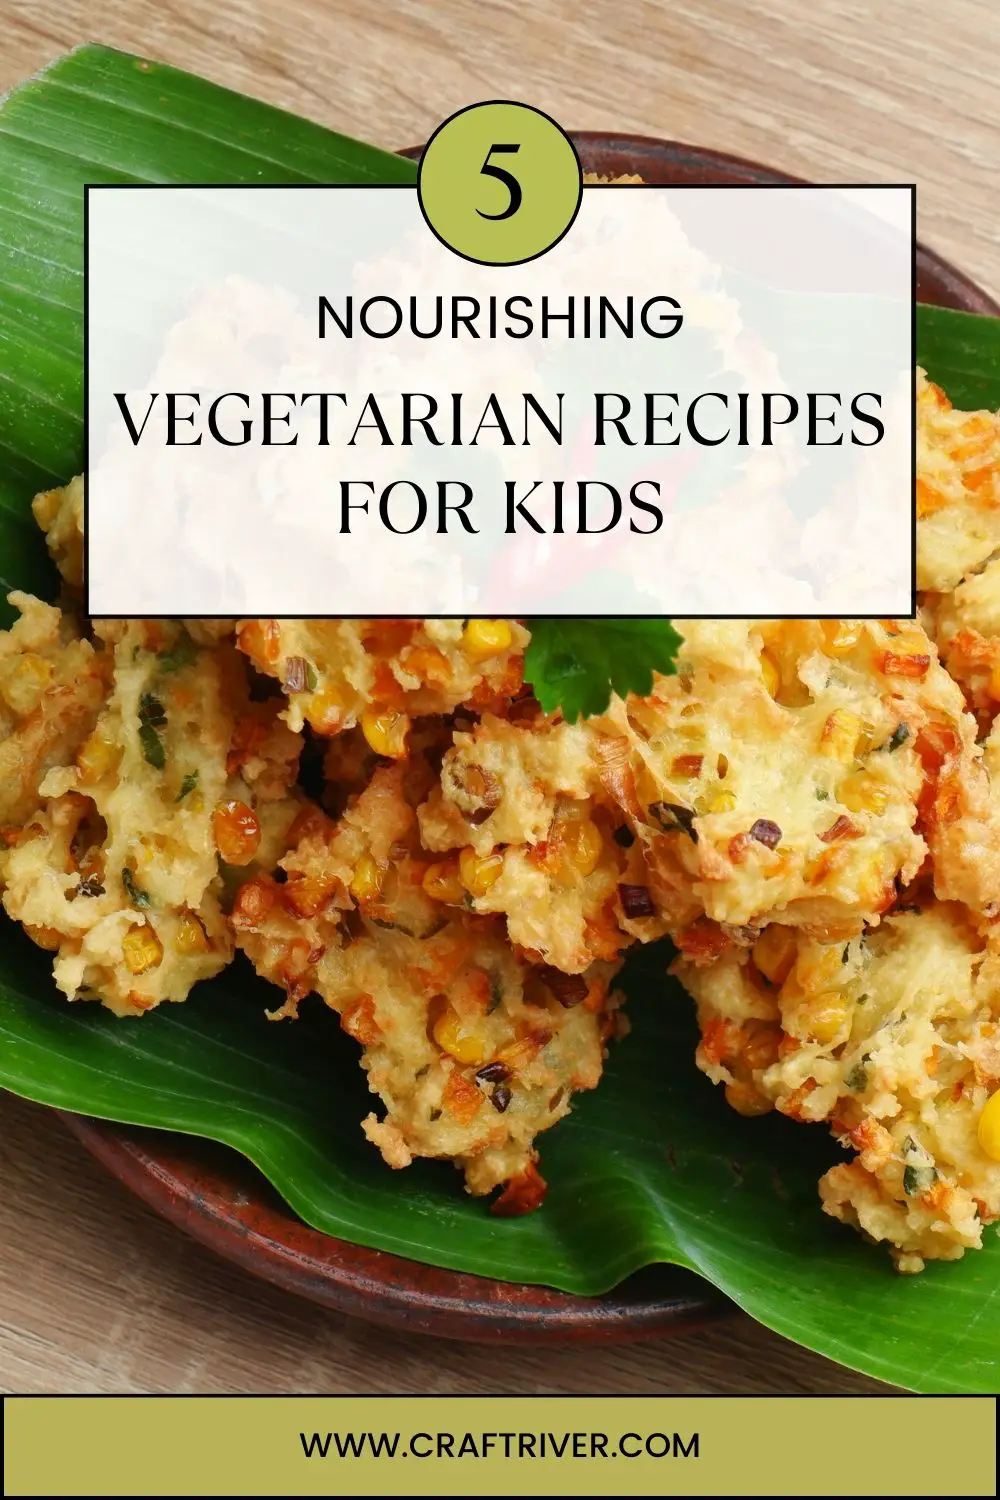 Nourishing Vegetarian Recipes for Kids